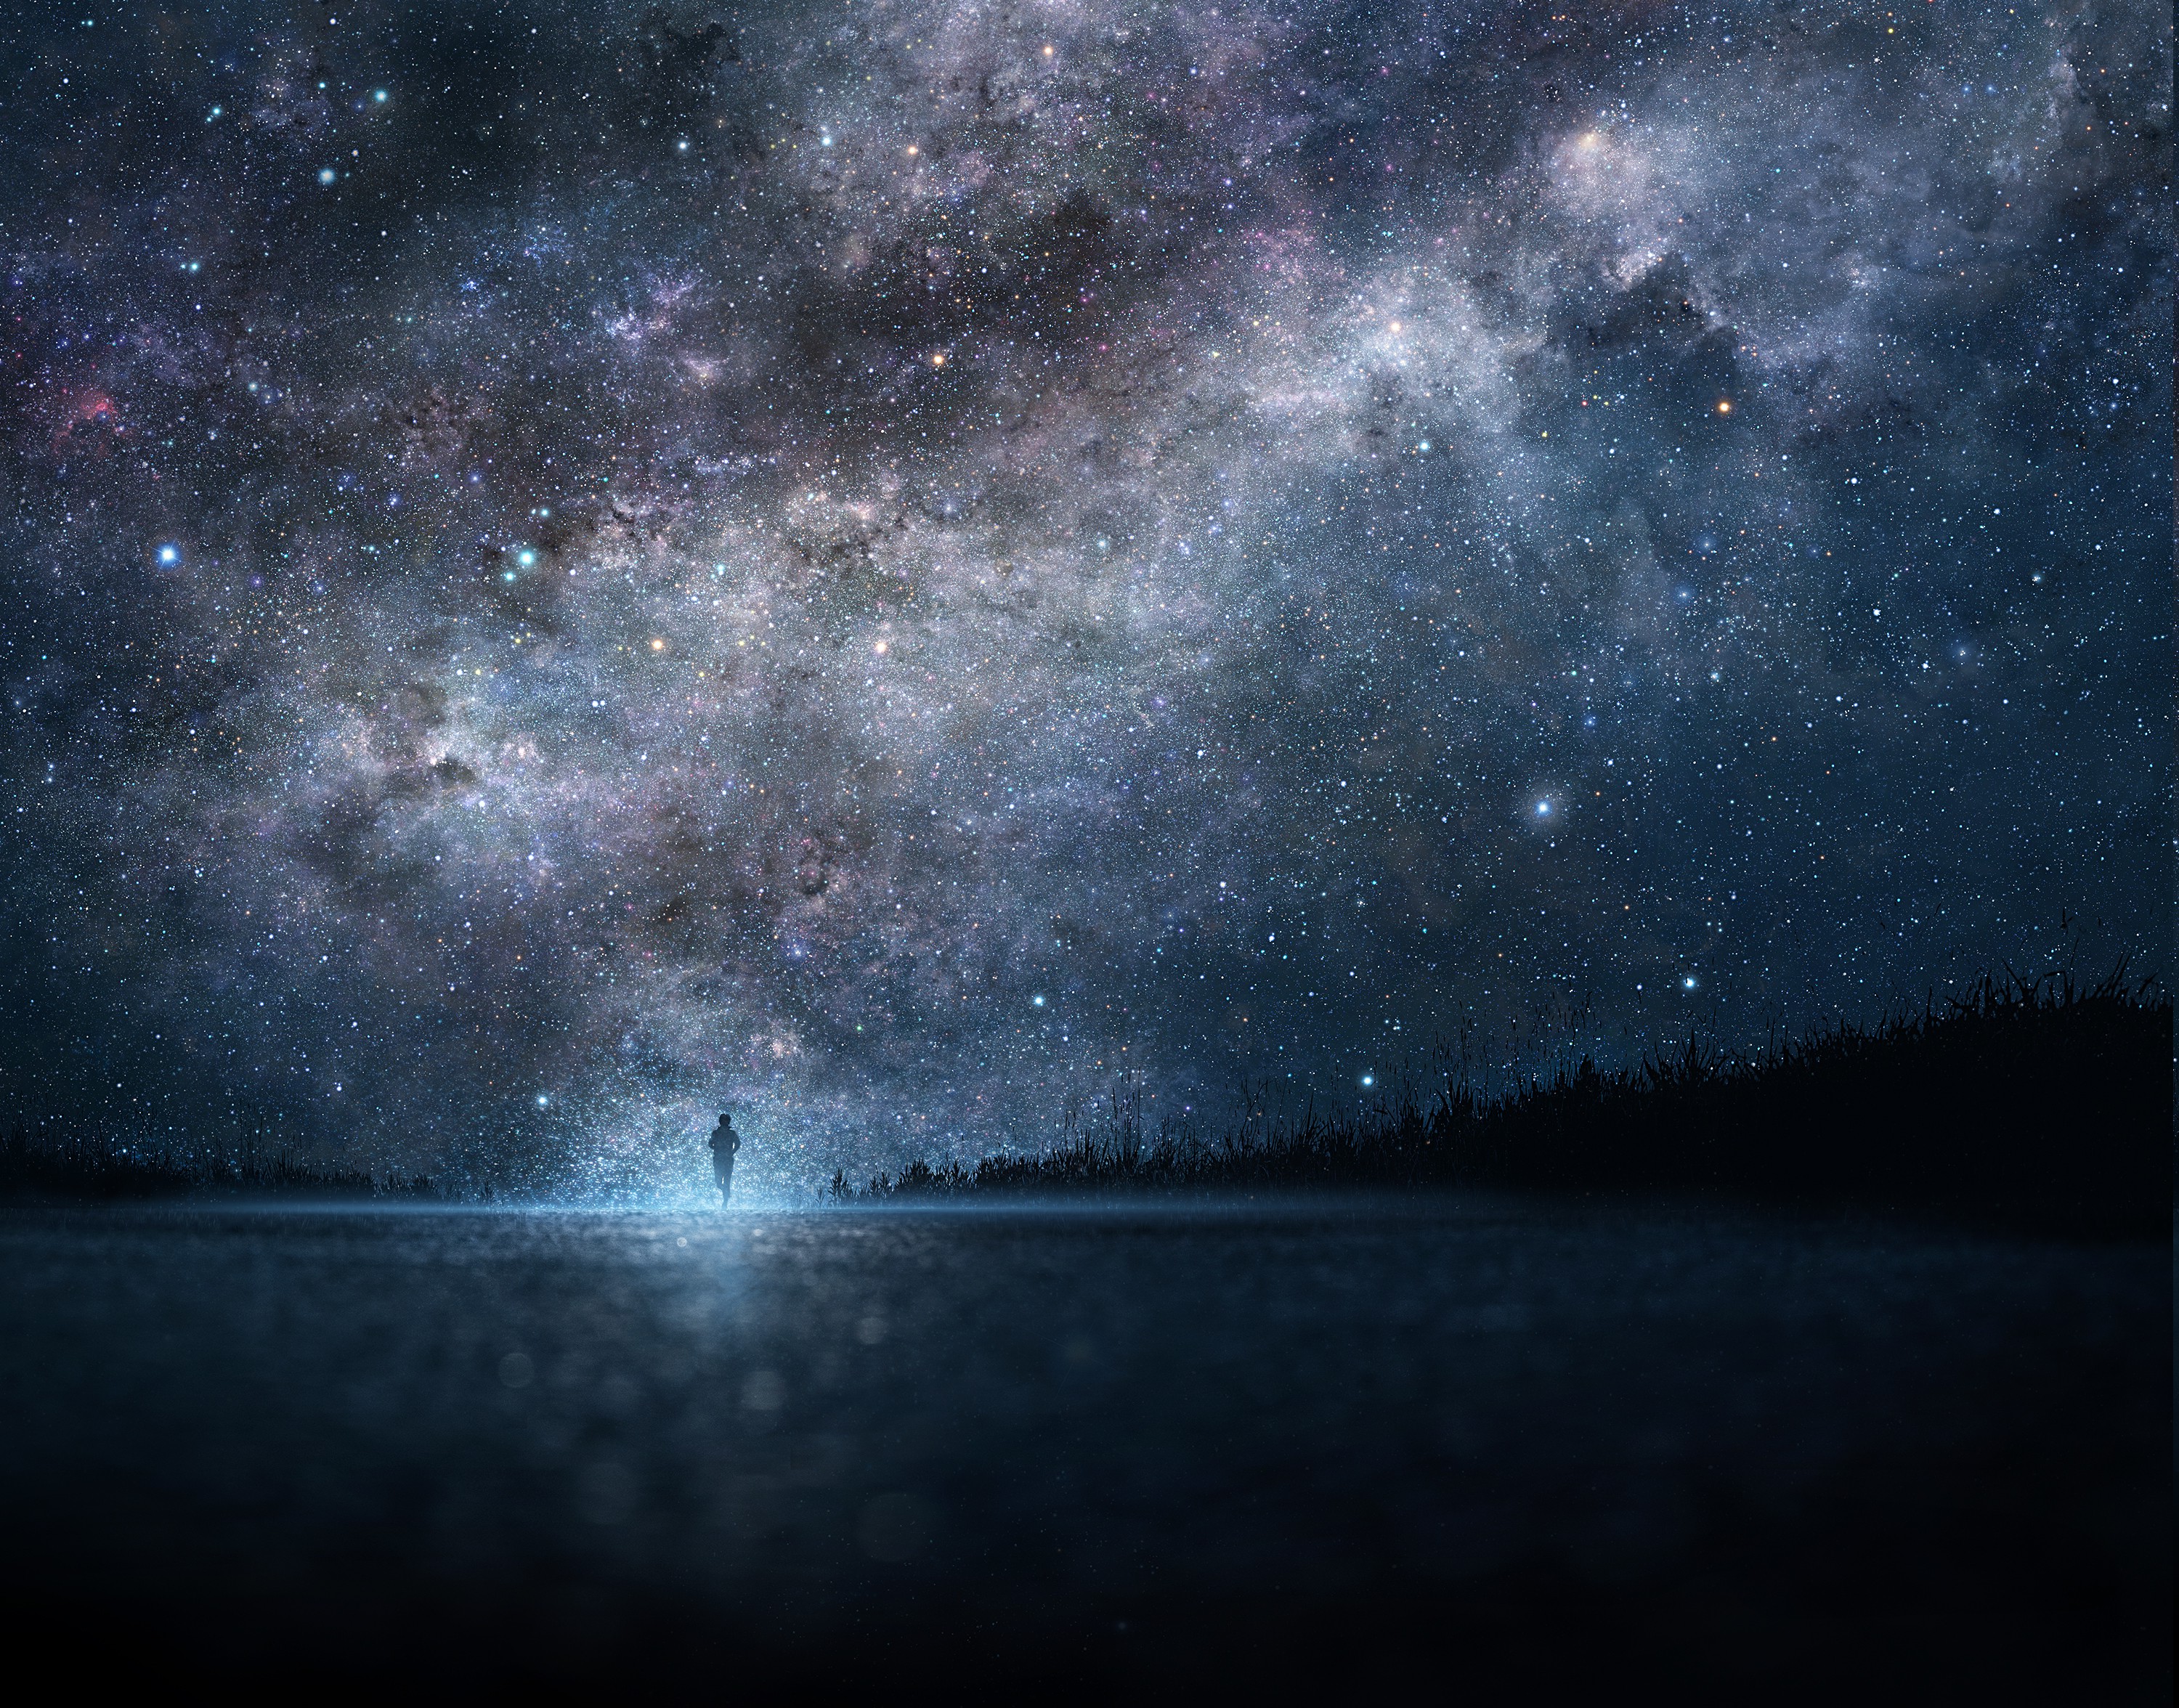 anime stars wallpaper,himmel,natur,atmosphäre,dunkelheit,nacht